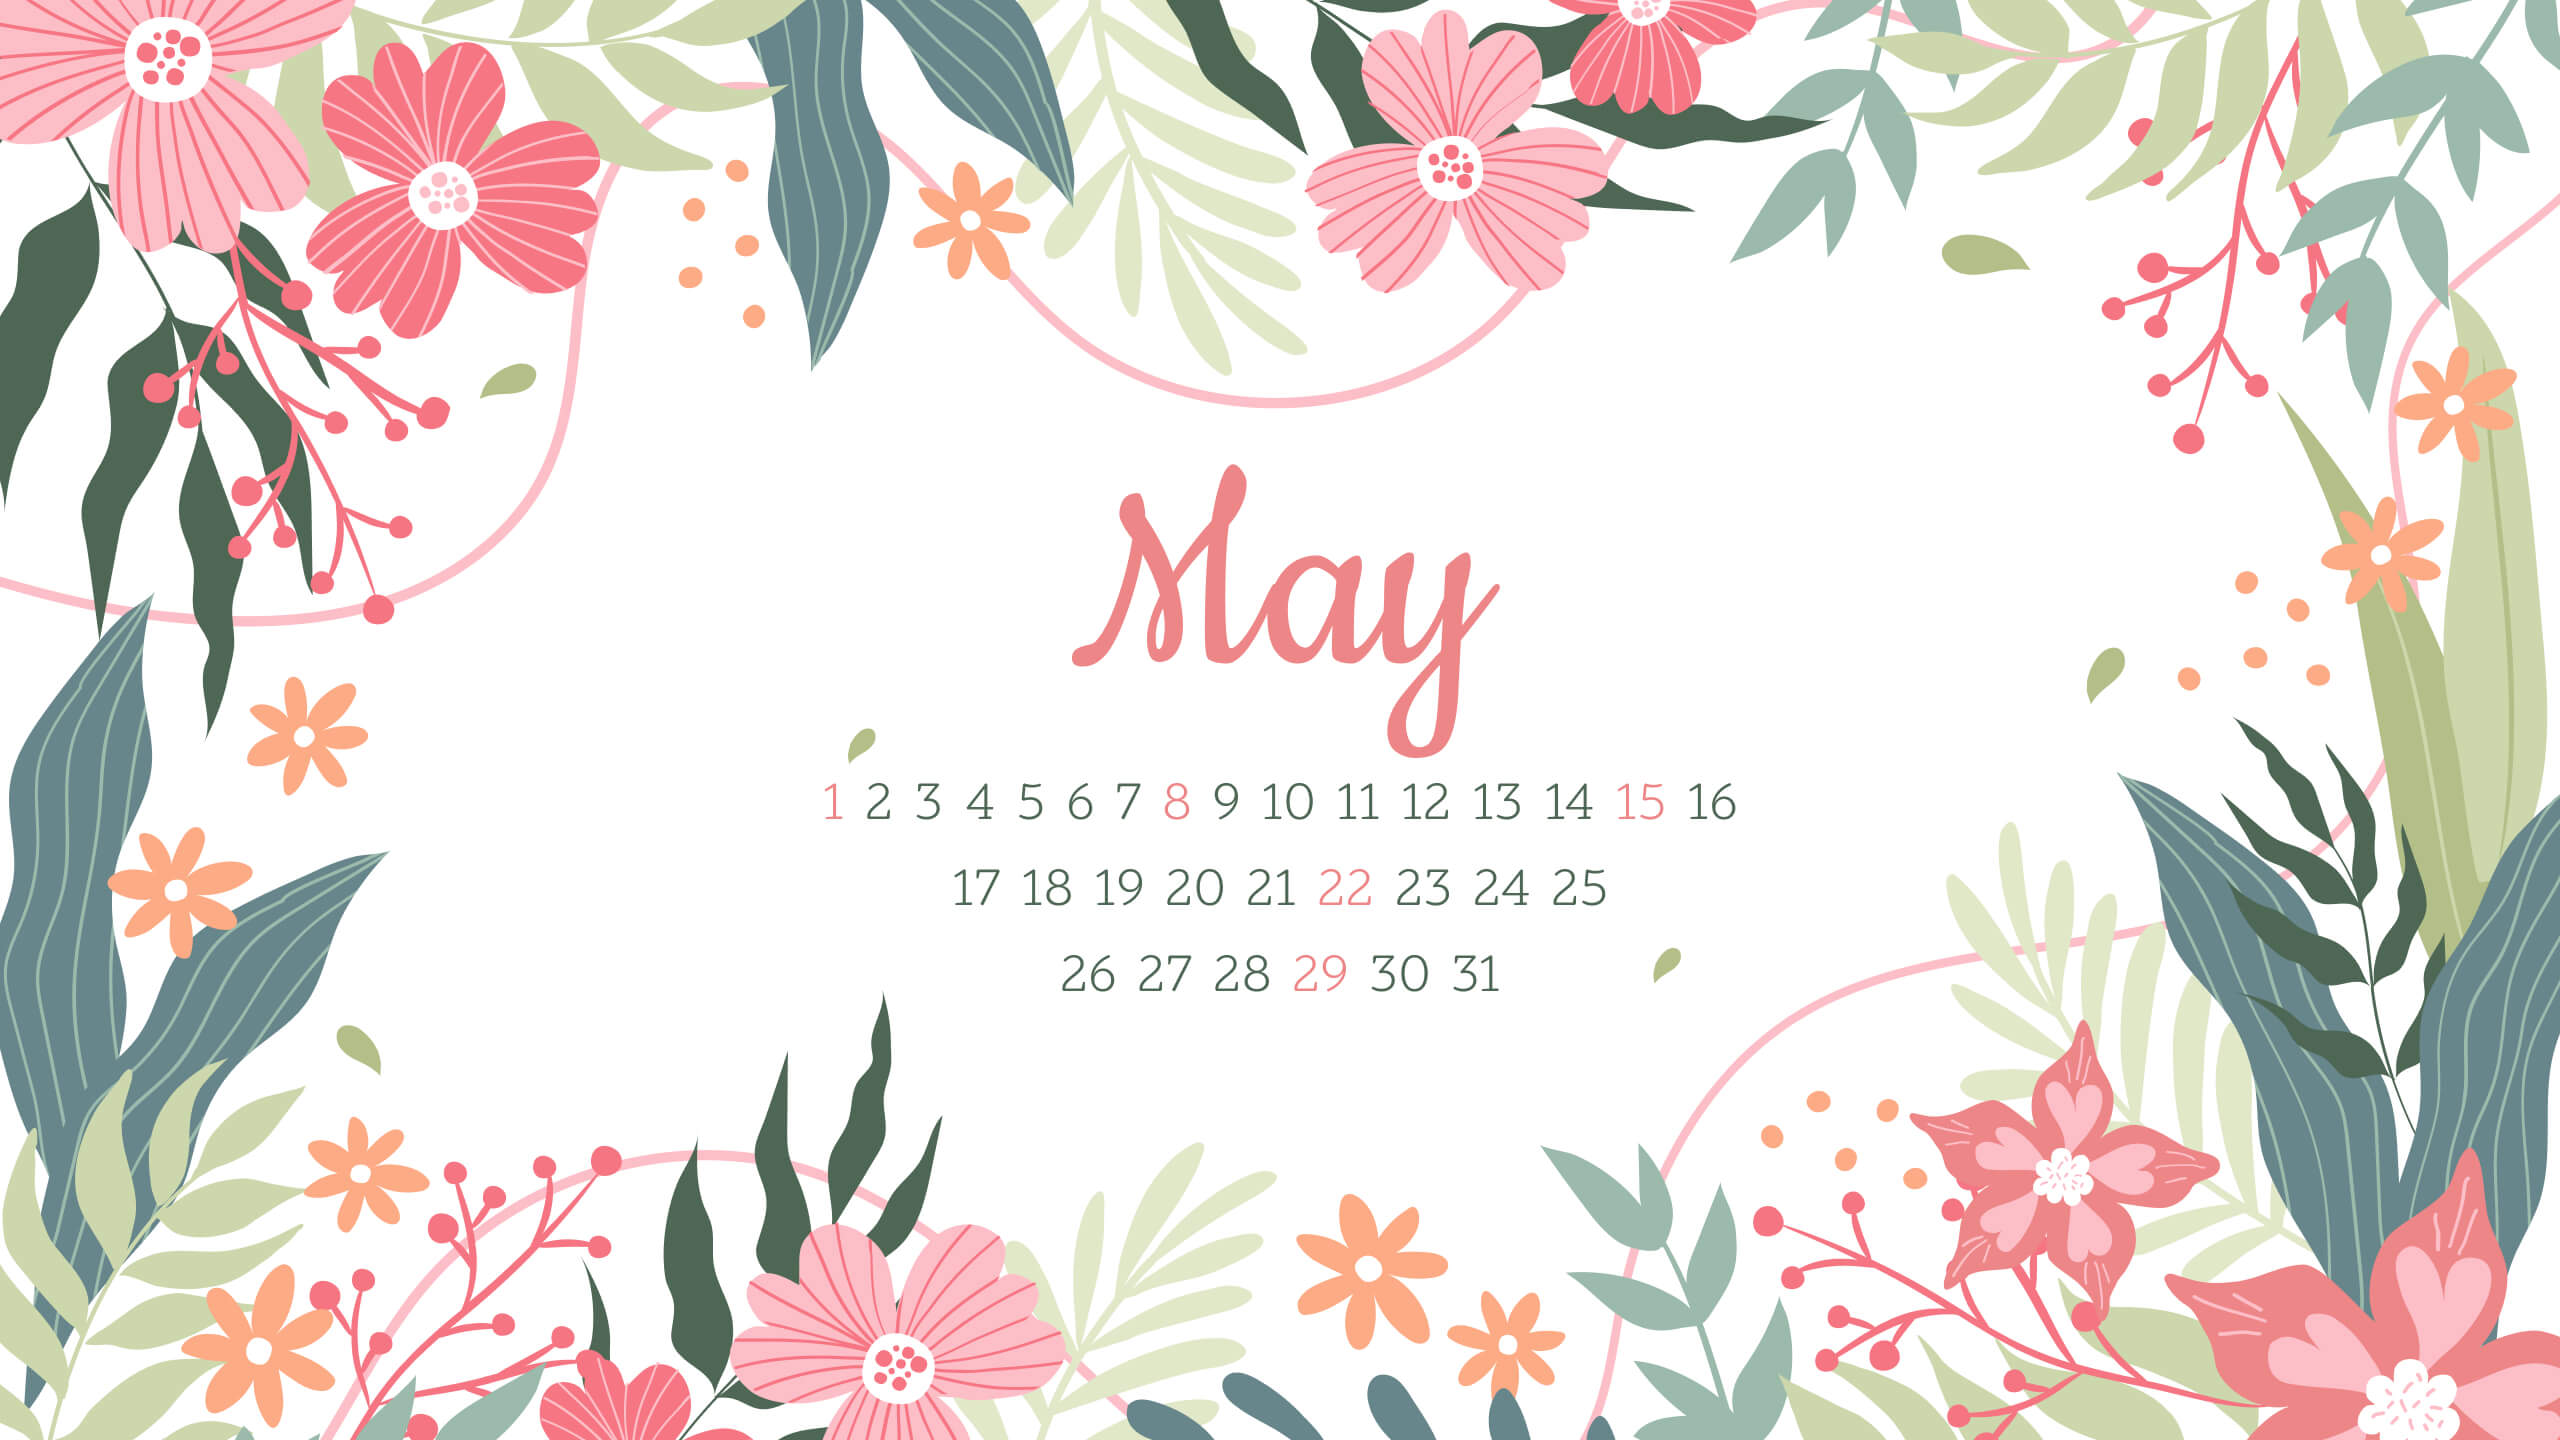 Free May Calendar Editable Template.